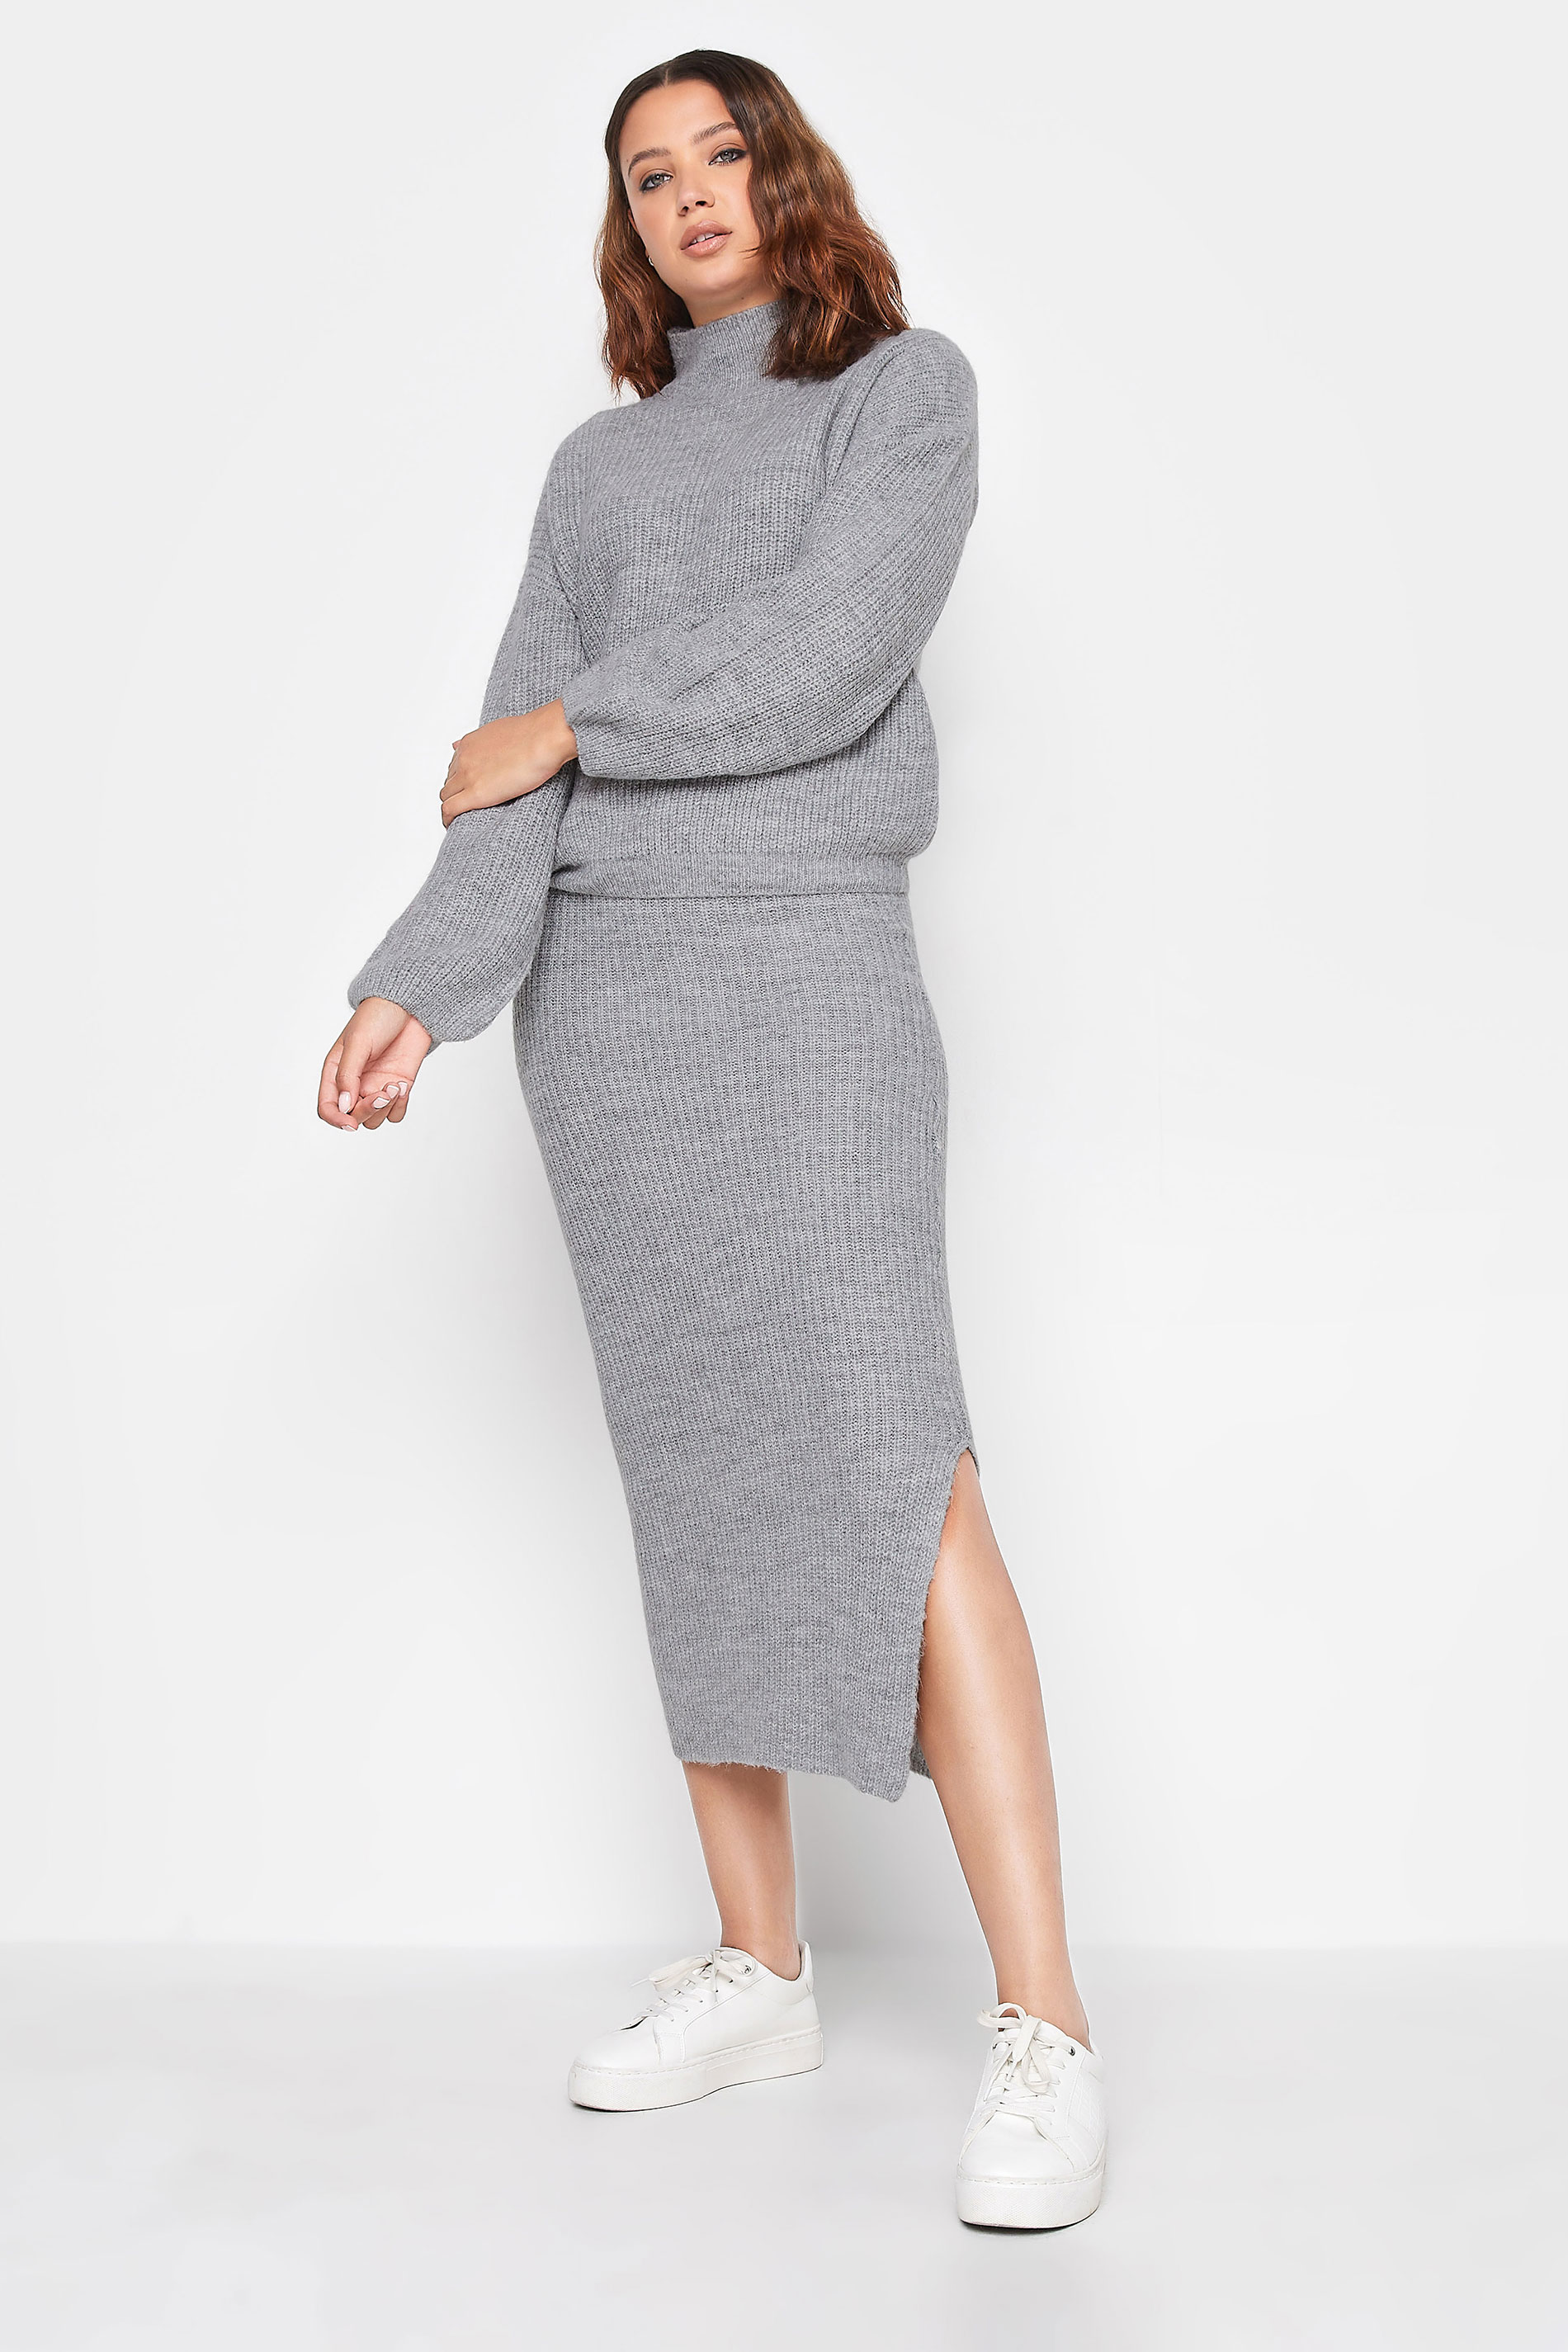 LTS Tall Grey Midi Knitted Skirt | Long Tall Sally 2